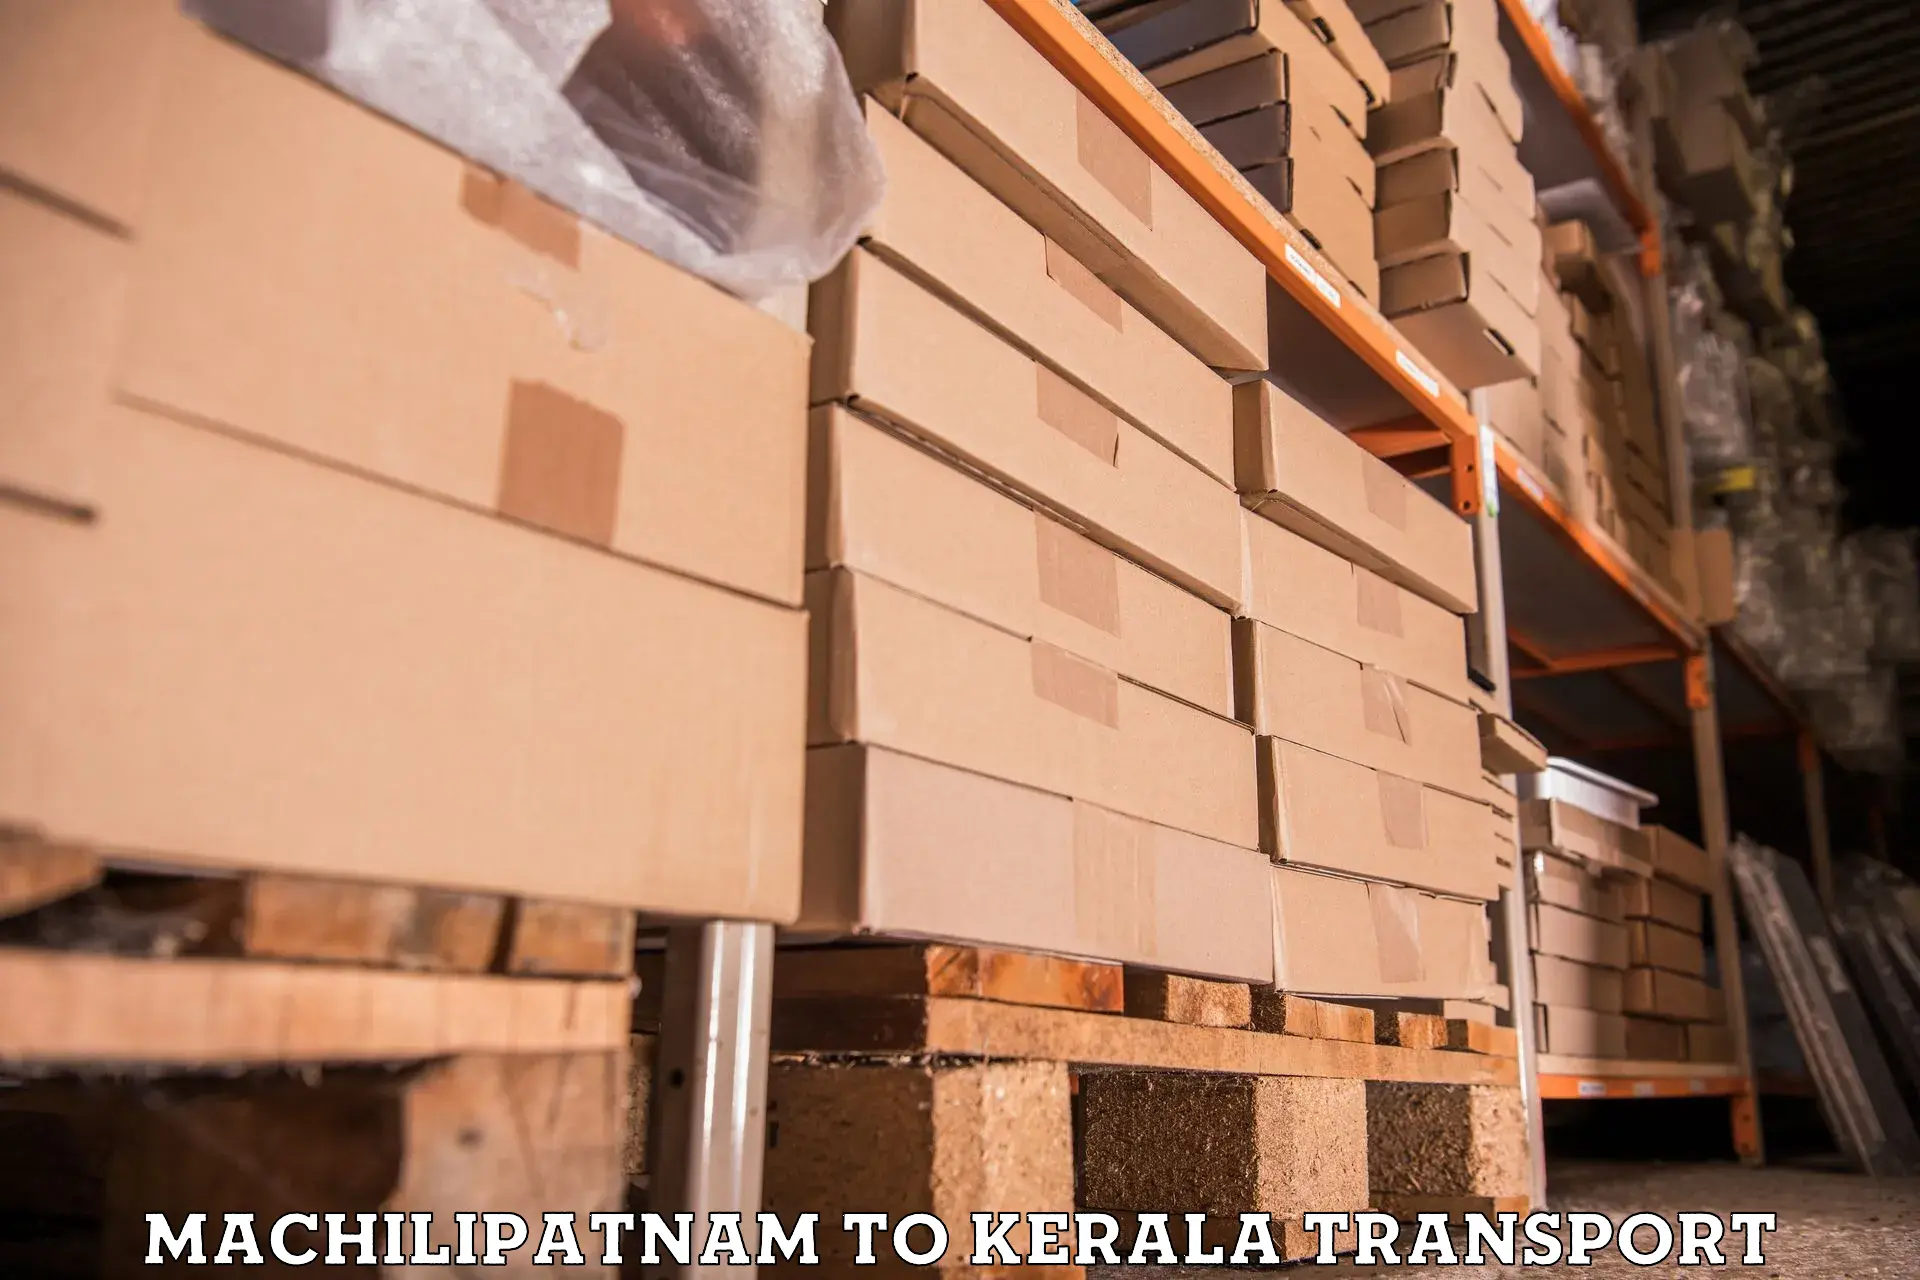 Shipping partner Machilipatnam to Trivandrum